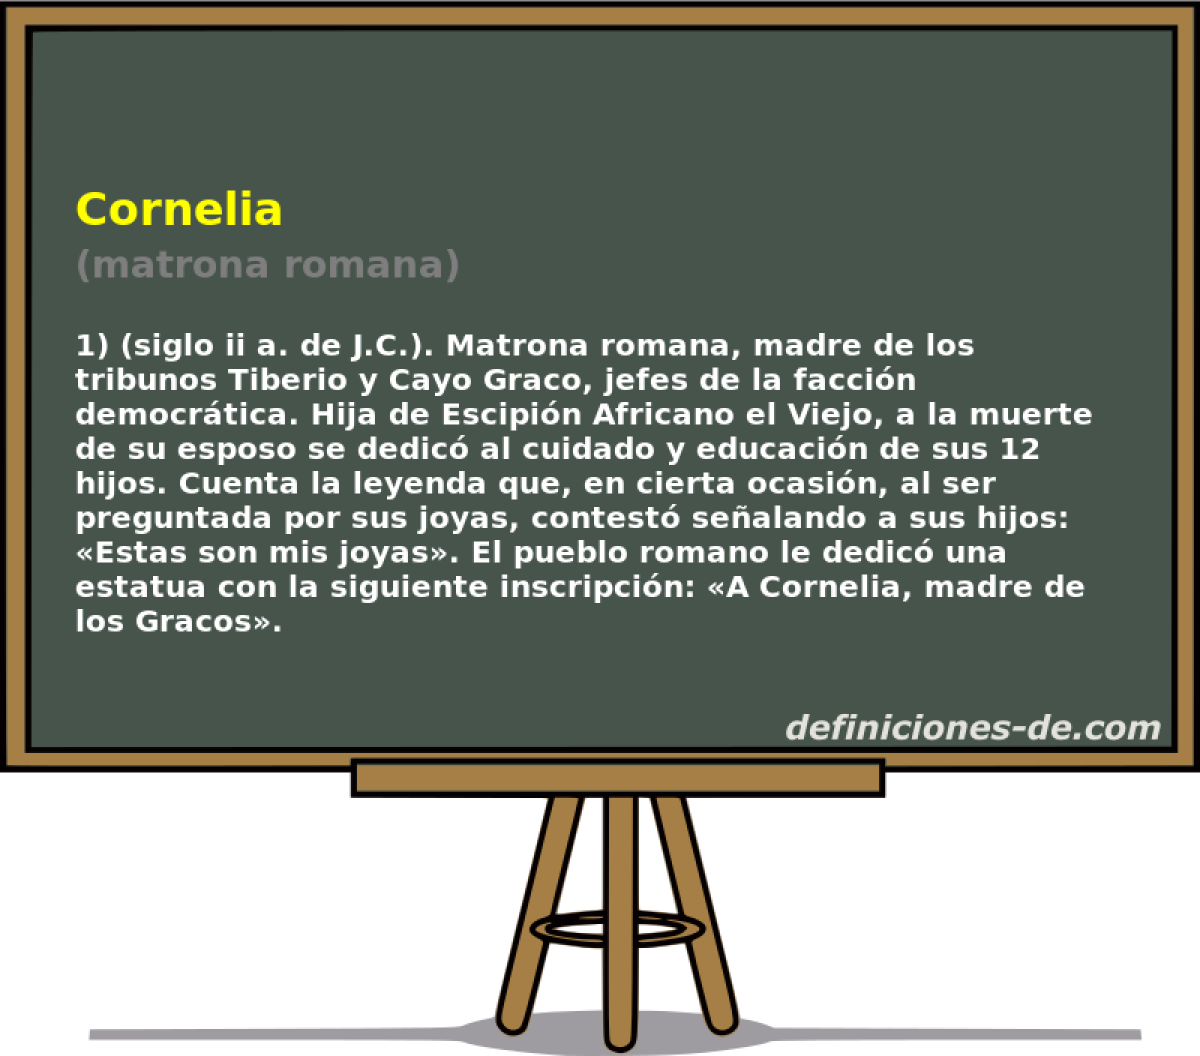 Cornelia (matrona romana)